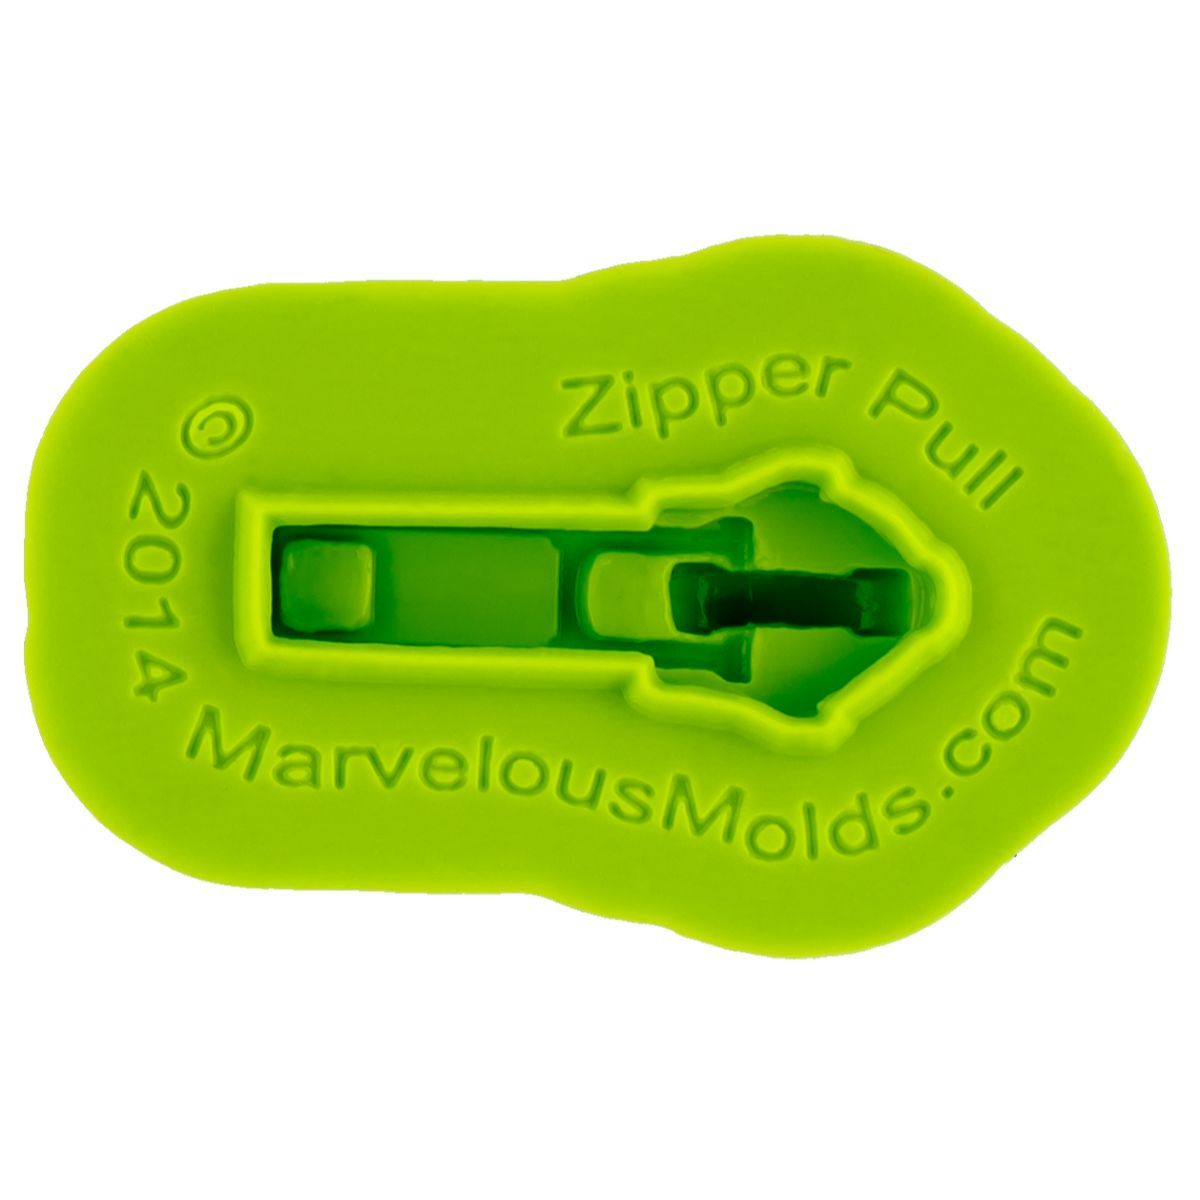 Zipper & Pull Mold - Bake Supply Plus